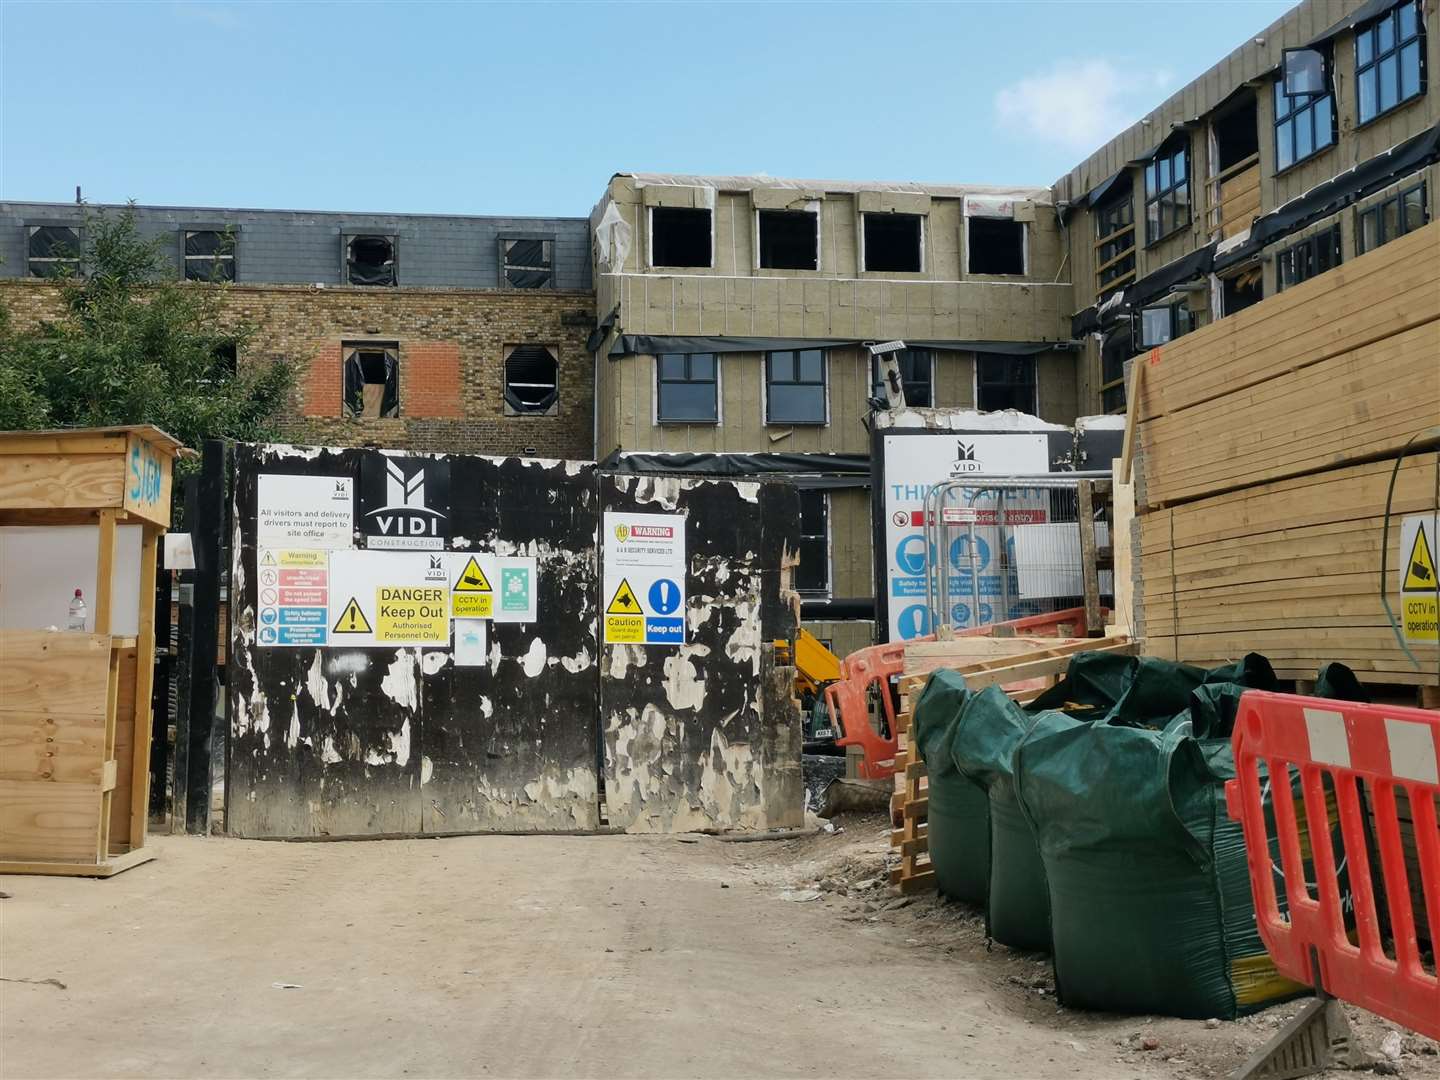 The site in Cavendish Street and Effingham Street in Ramsgate